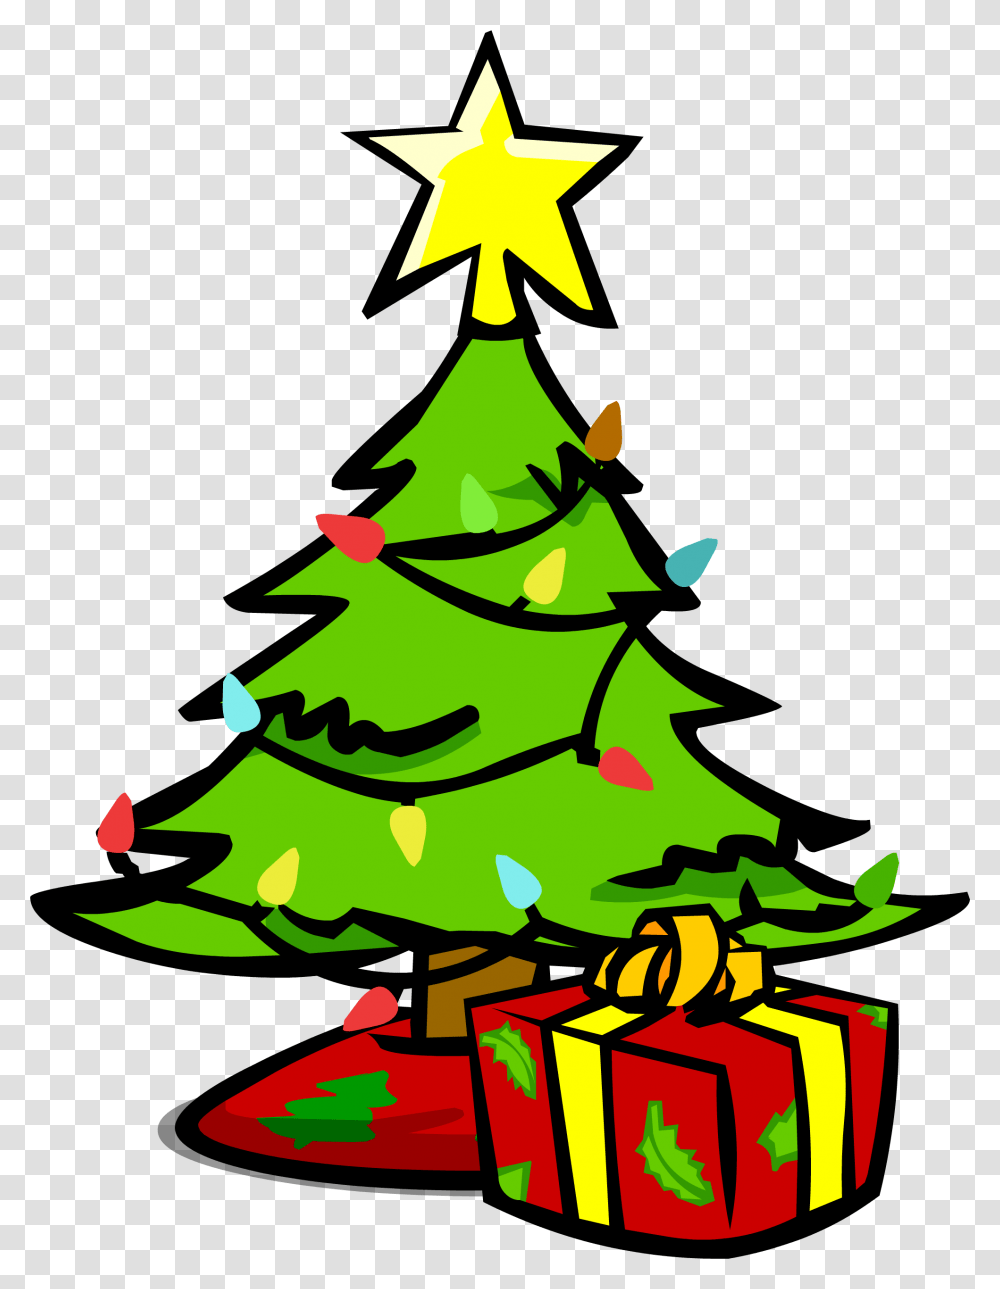 Small Christmas Tree Sprite Christmas Tree Sprite, Plant, Star Symbol, Ornament Transparent Png